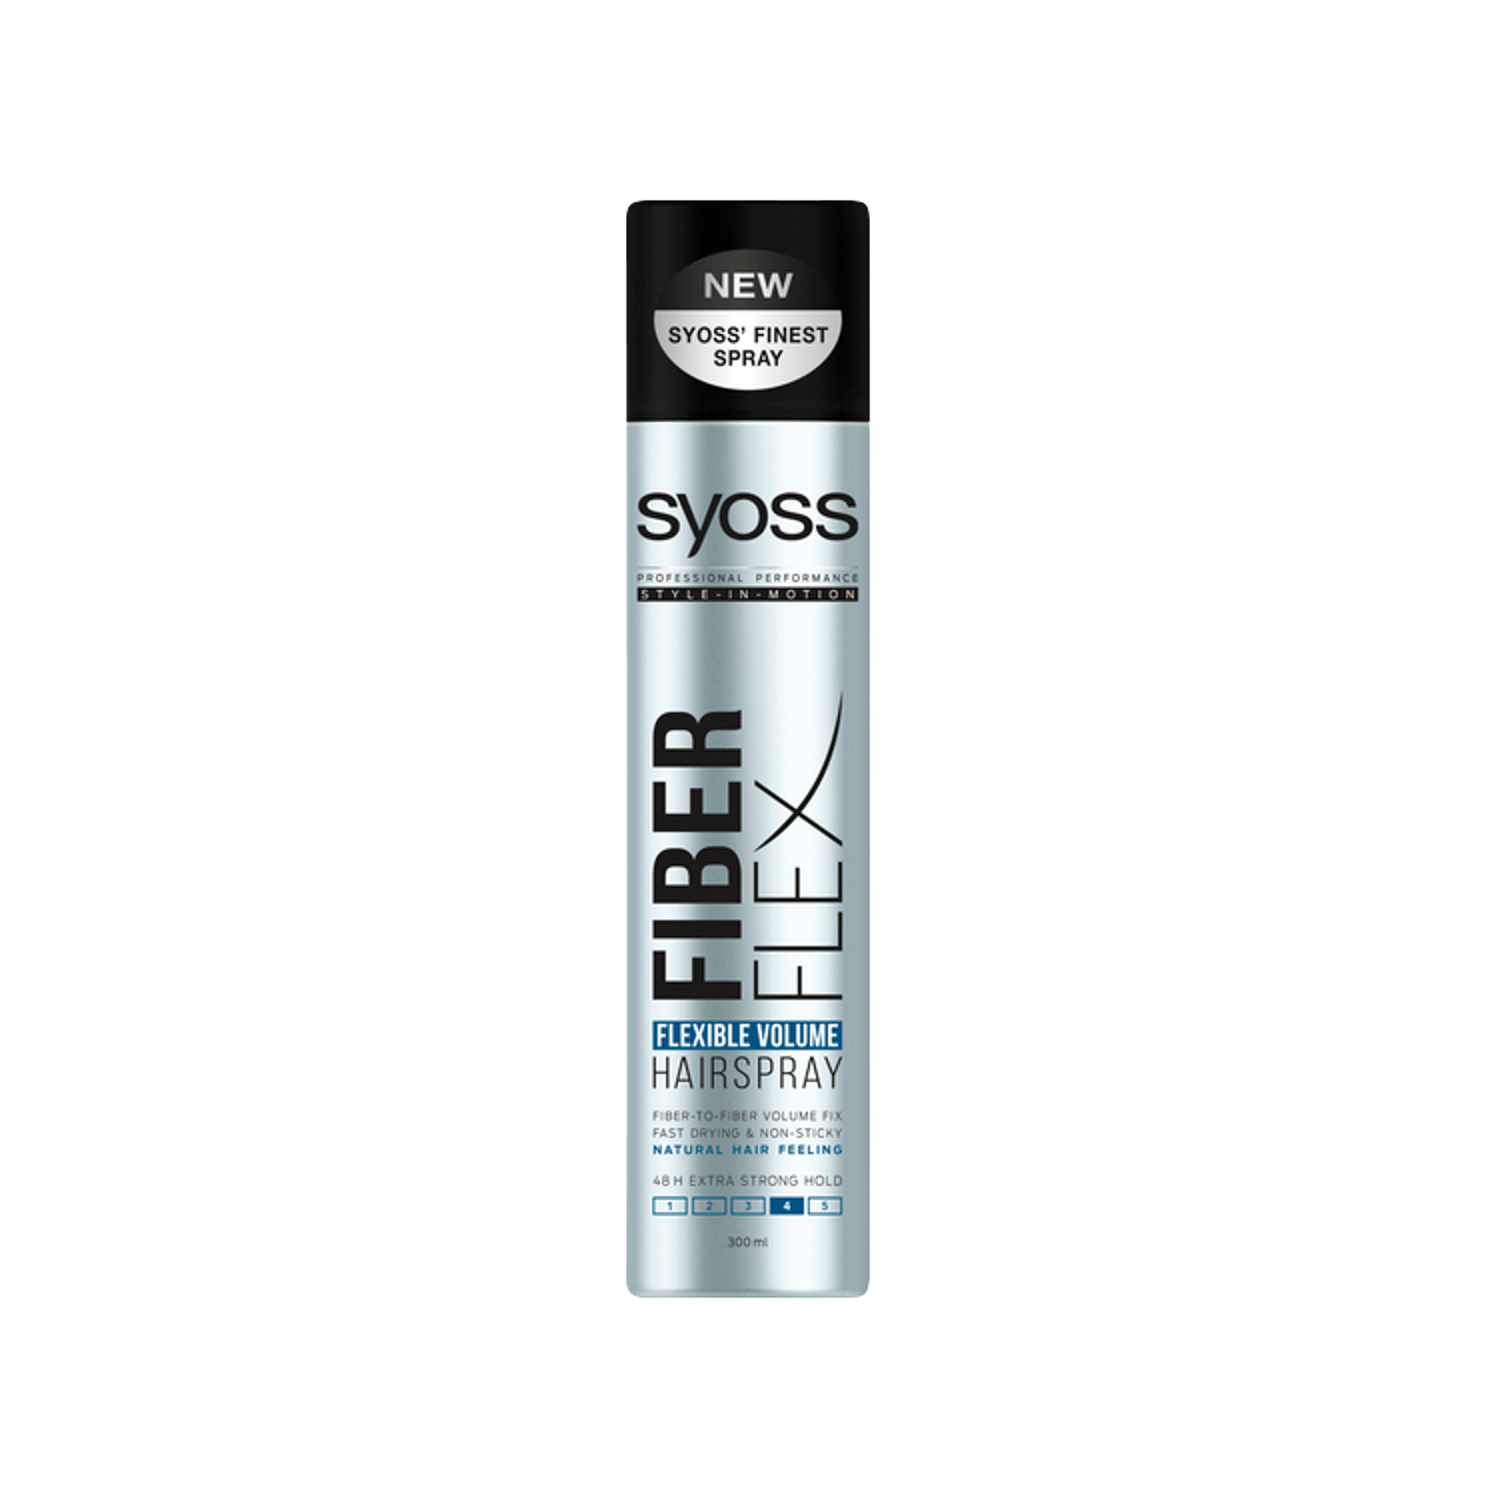 Лак для волос экстрасильного объема Syoss Fiberflex, 300 мл